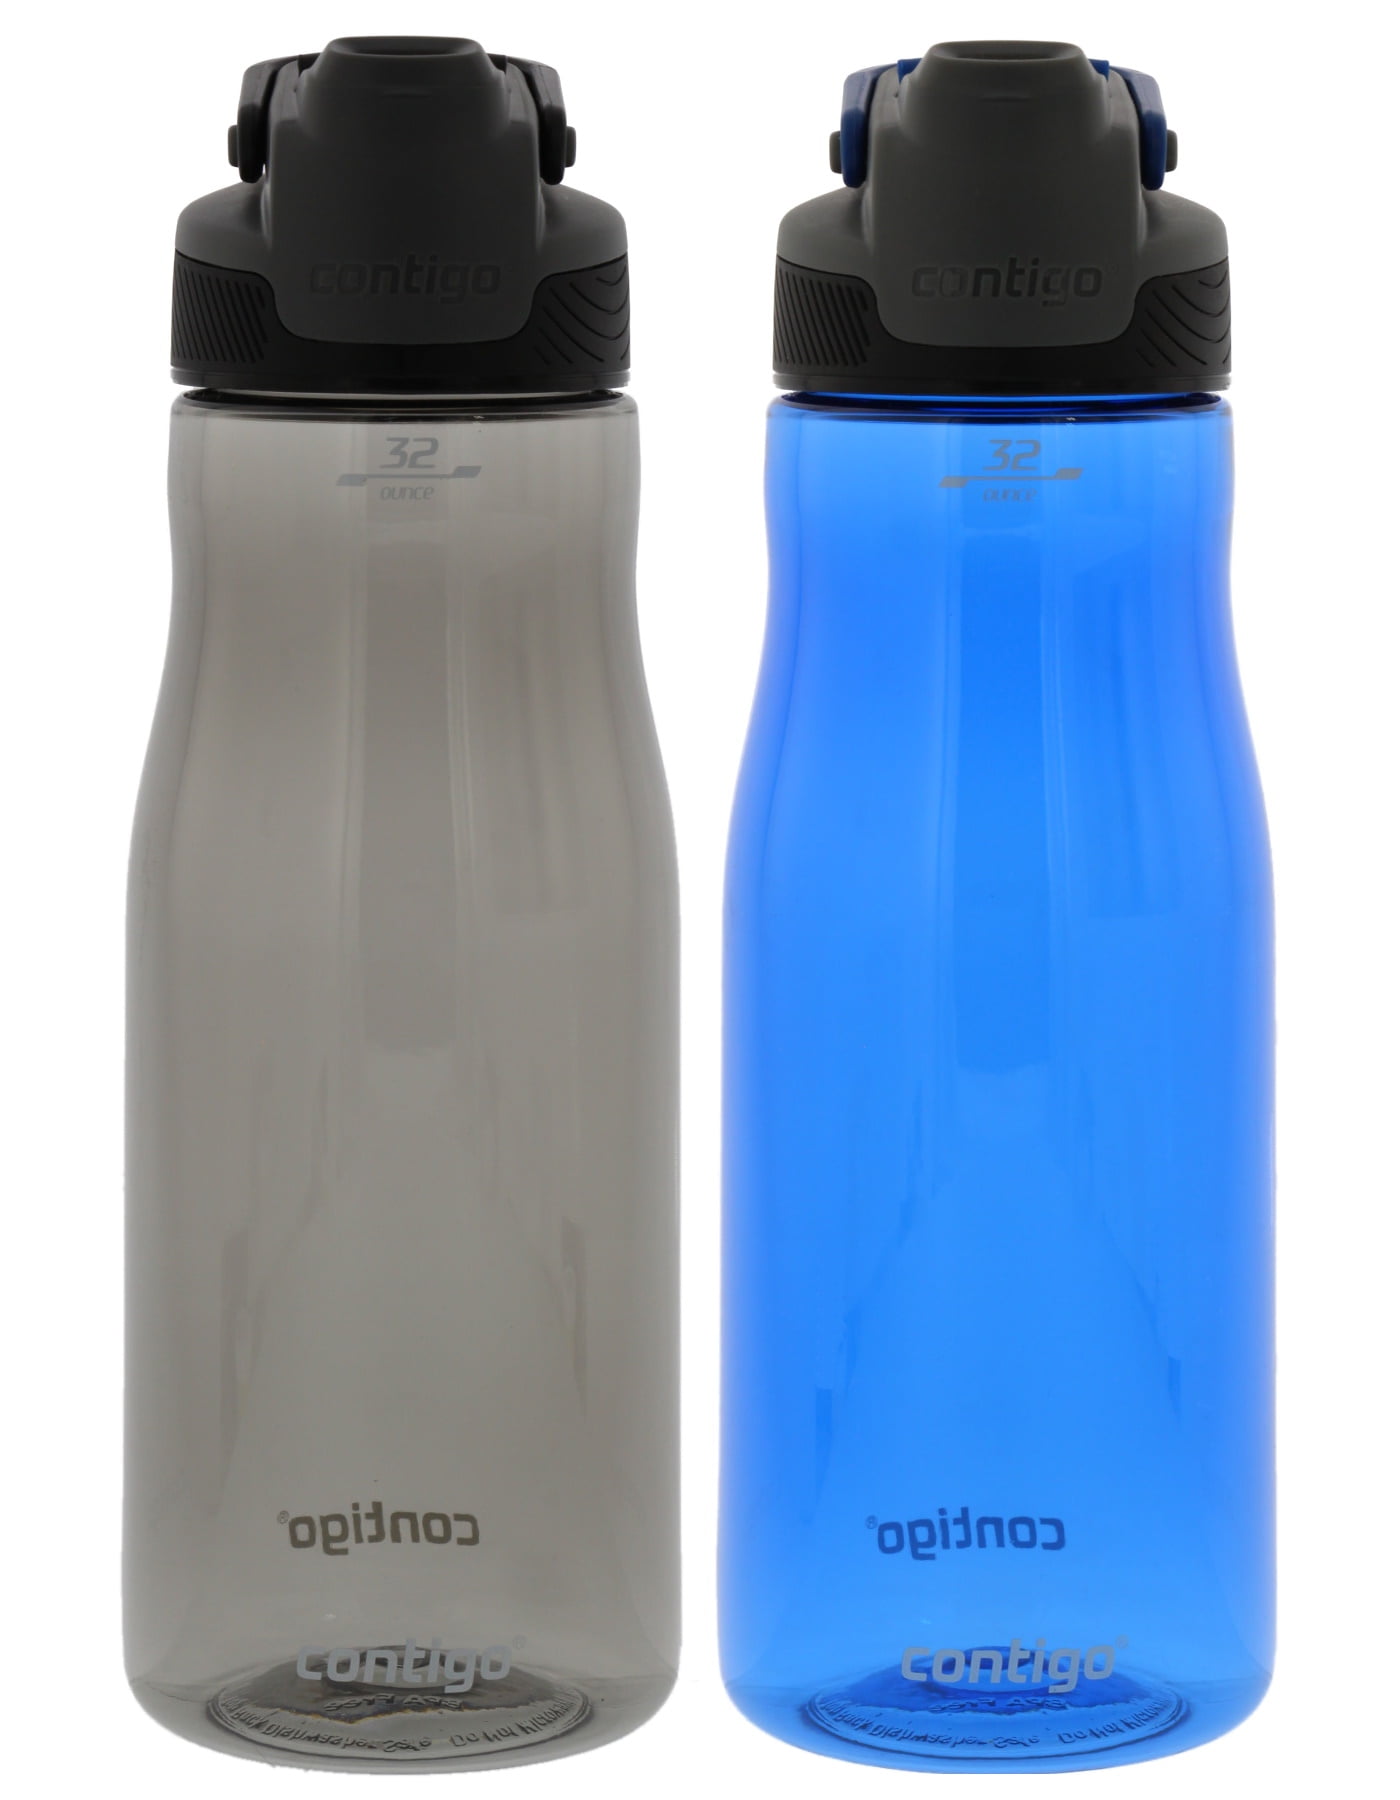 Hydro Flask 32oz water bottle - Contigo Autoseal coffee mug lot of 2